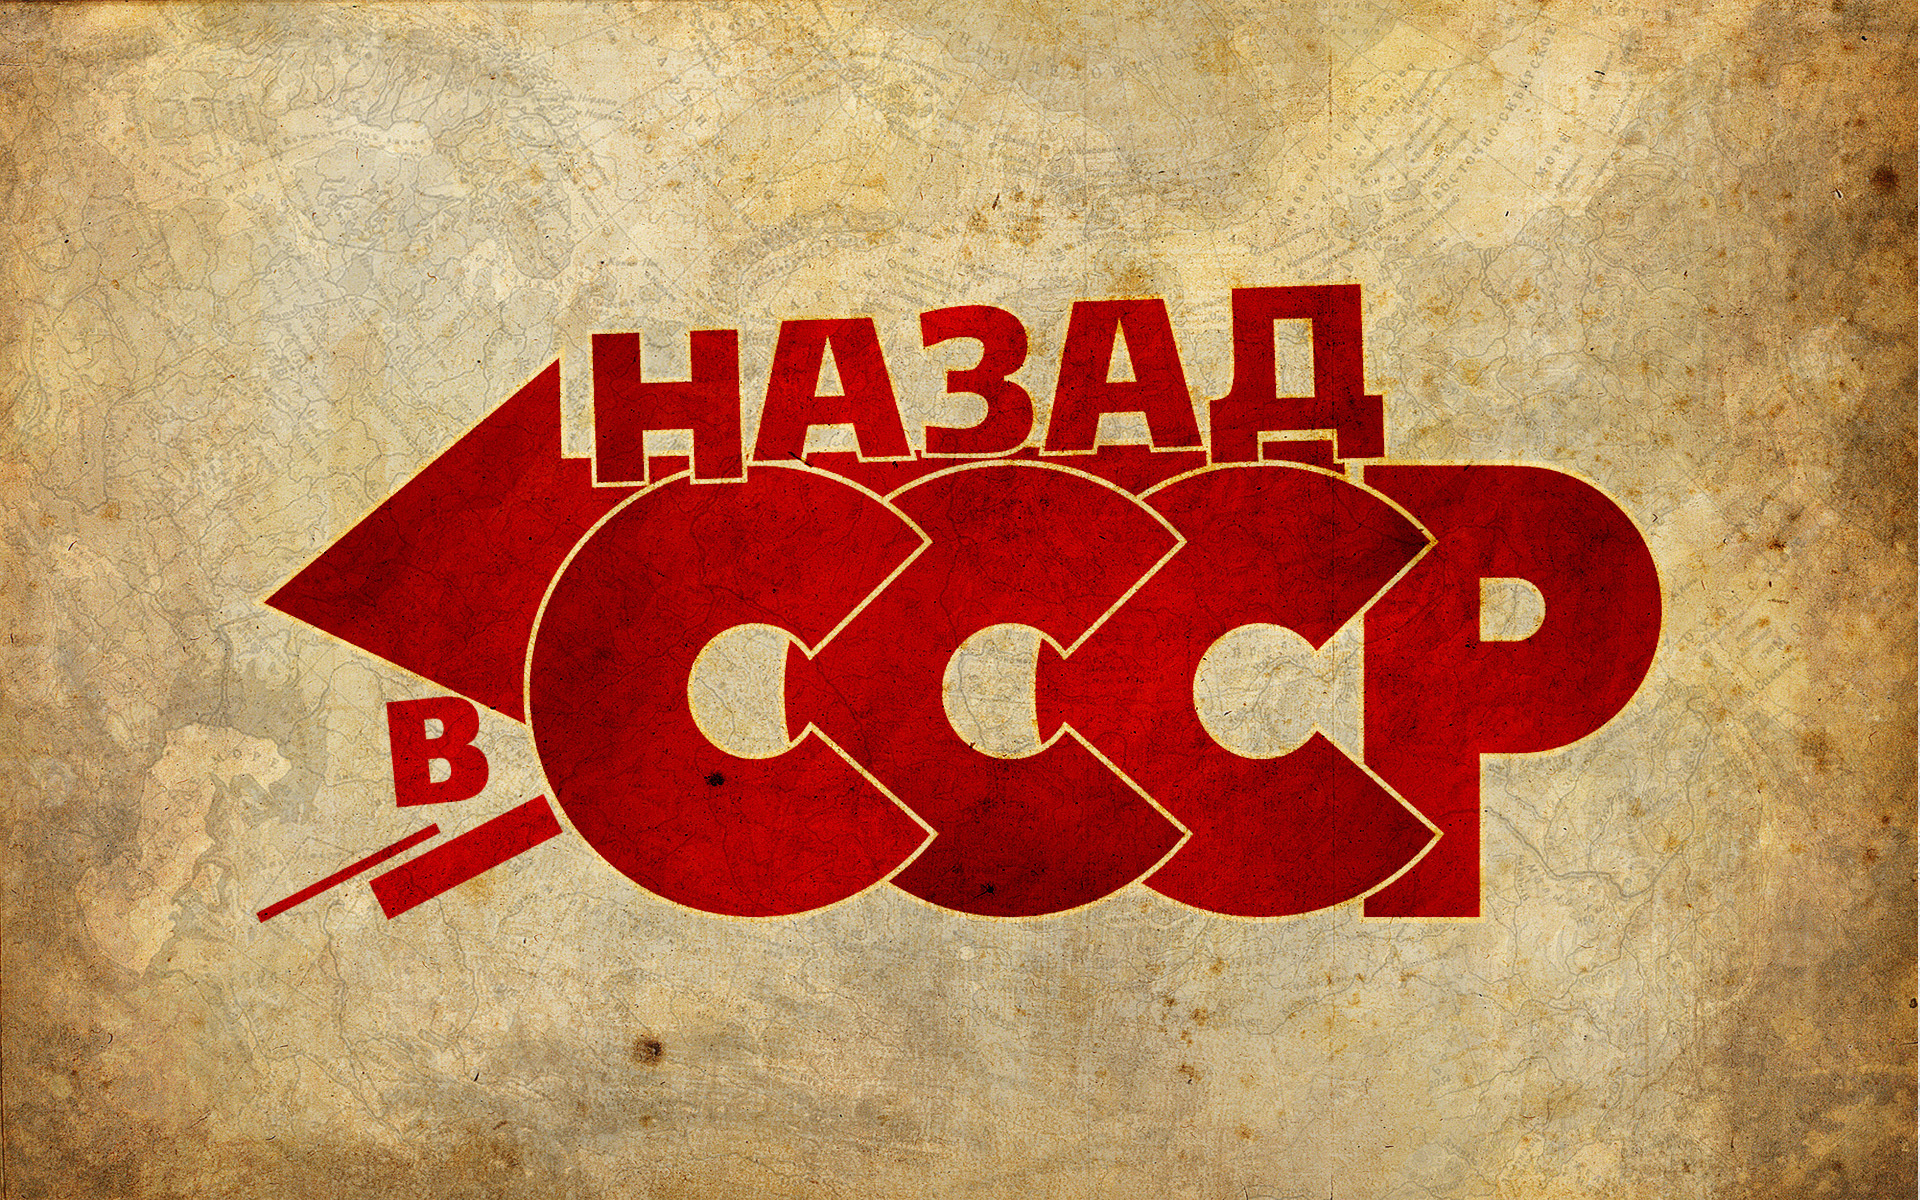 Обои 90 х. Назад в СССР. Плакат назад в СССР. Назад в СССР надпись. Фон в стиле СССР.